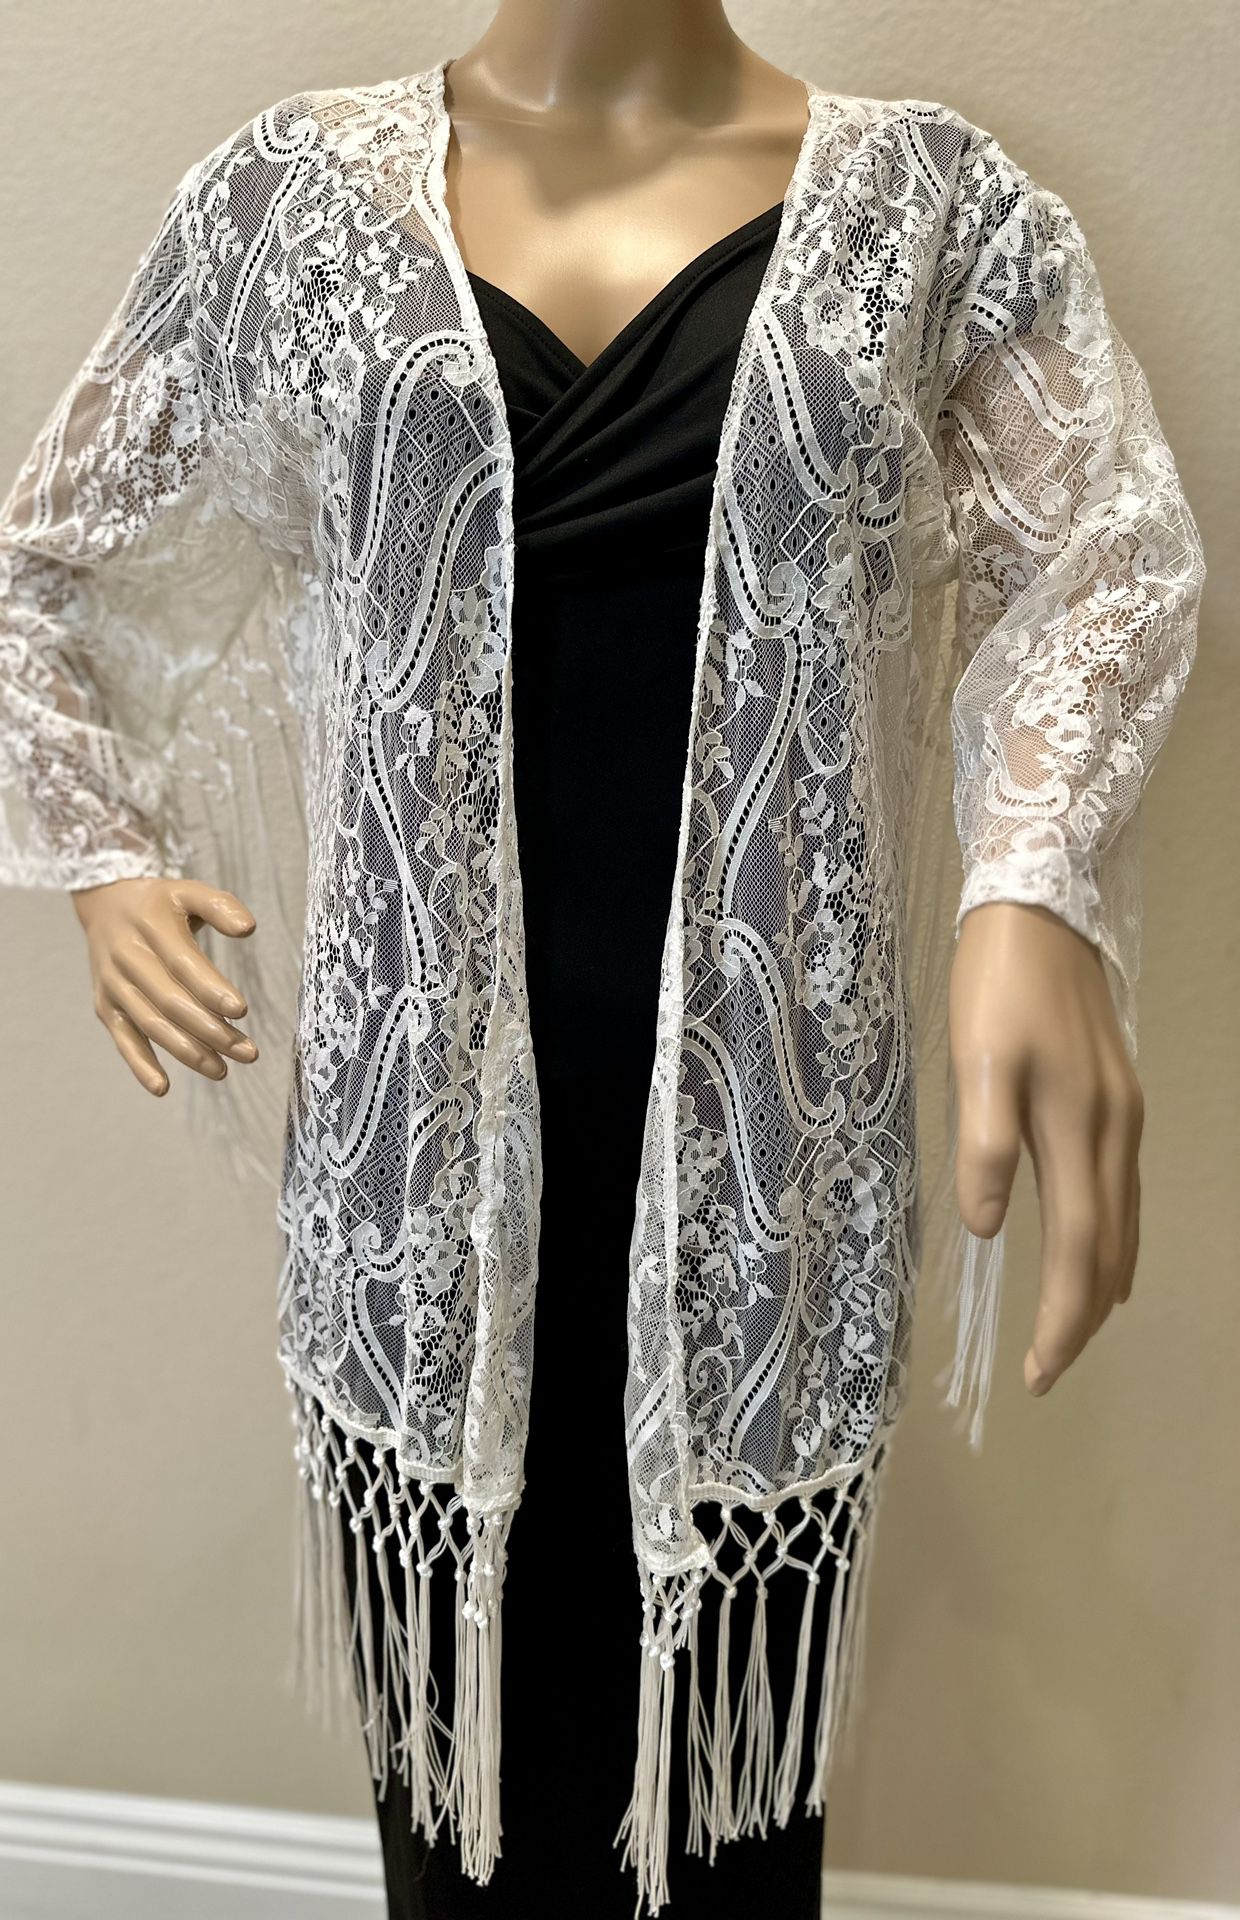 White Lace Crochet Trim Cardigan Cover Up Dress Medium 